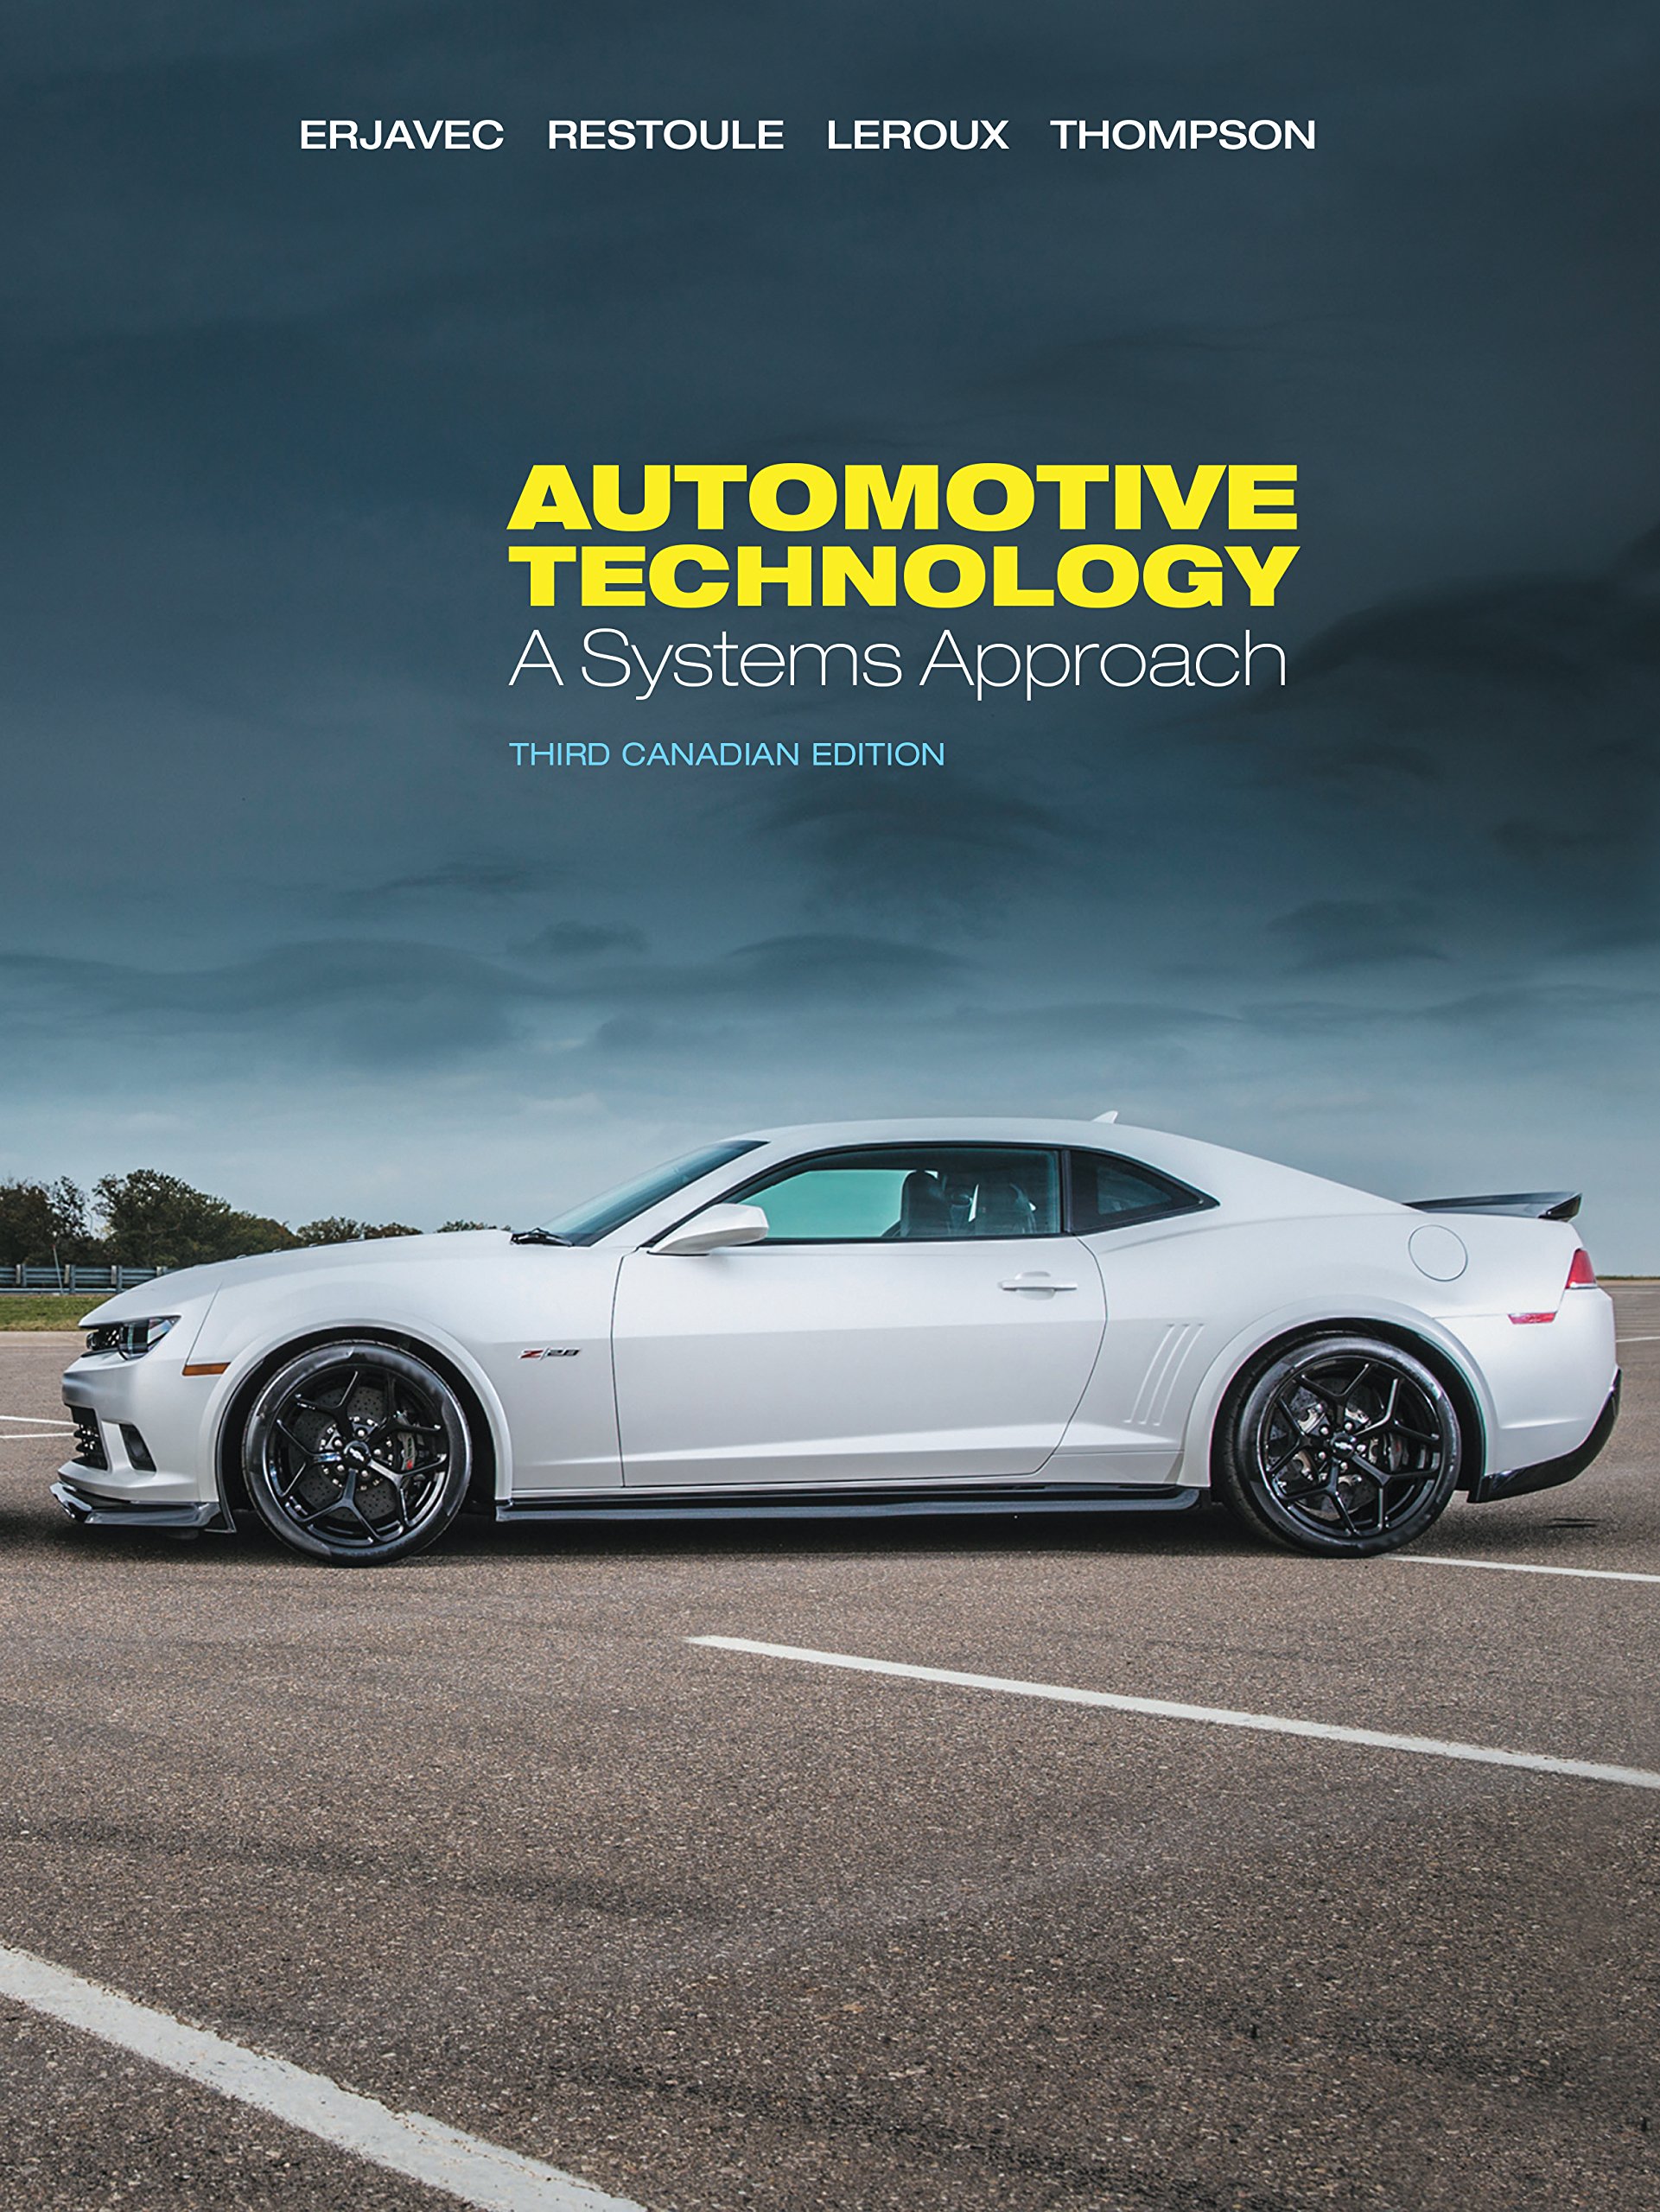 automotive technology a systems approach by jack erjavec pdf free download